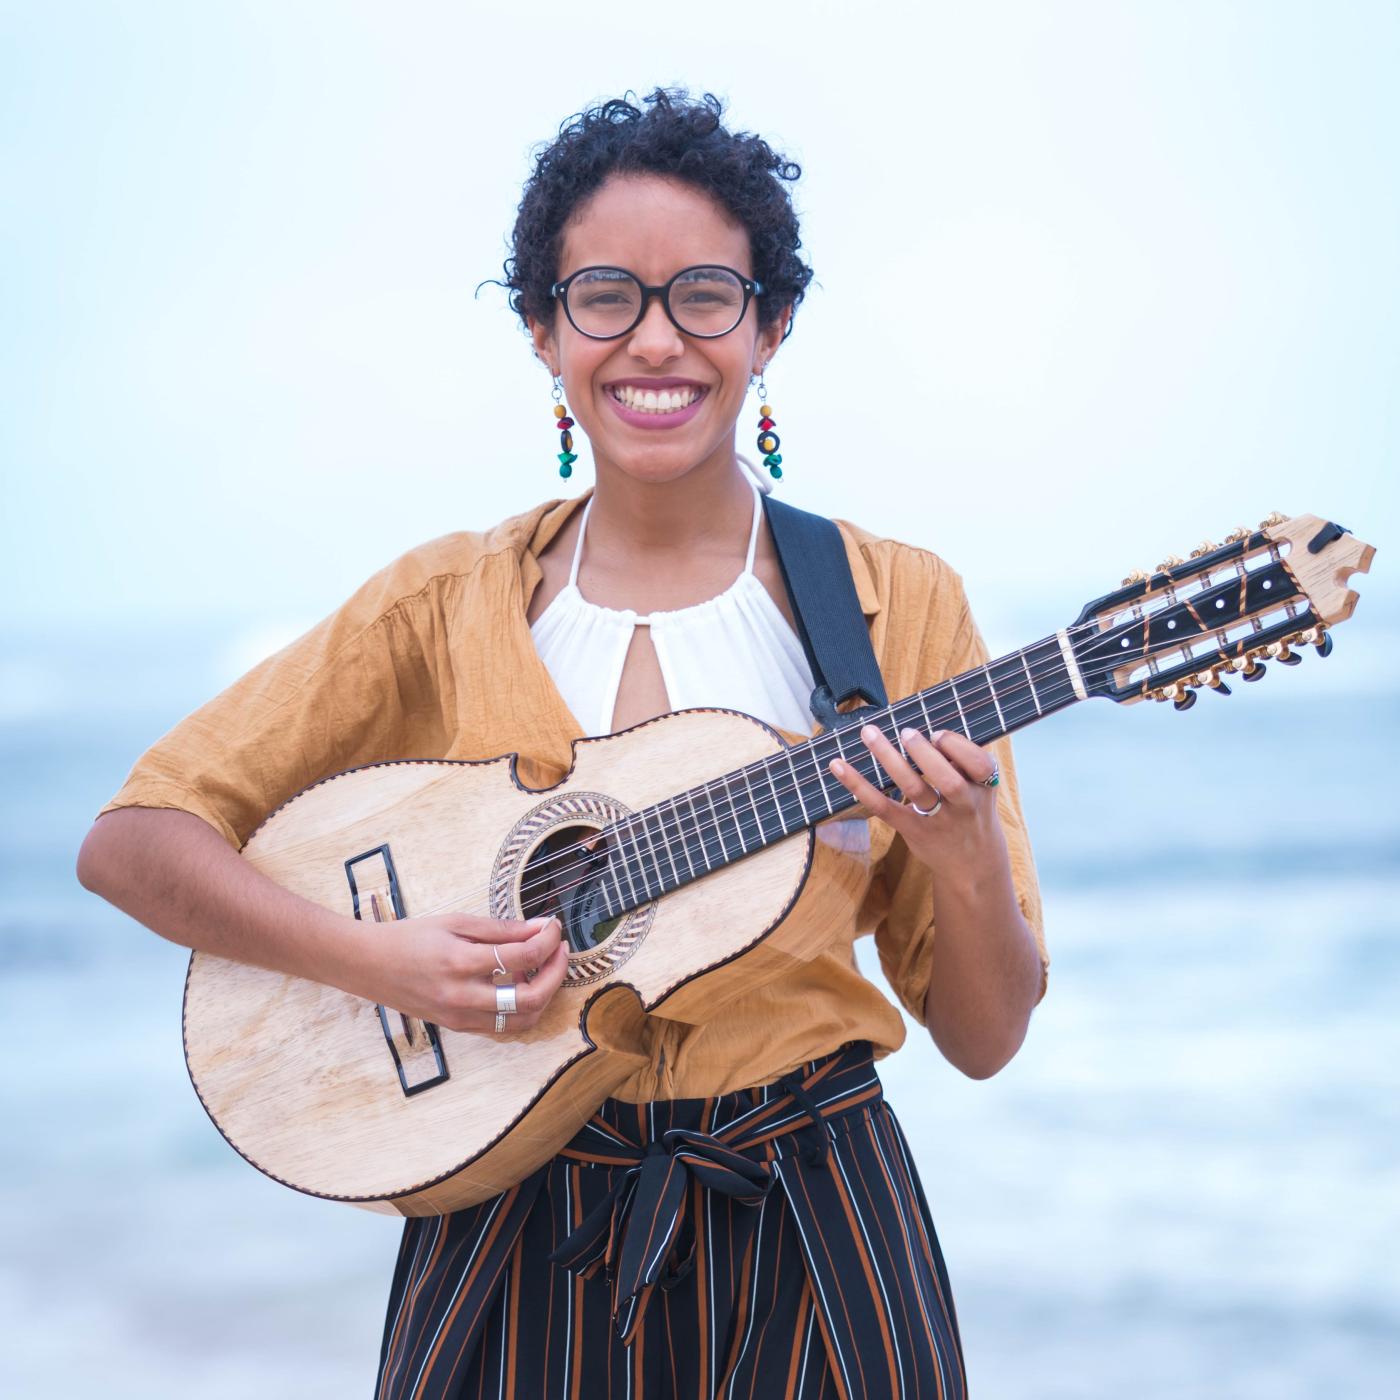 Fabiola plays the cuatro in front of the ocean.